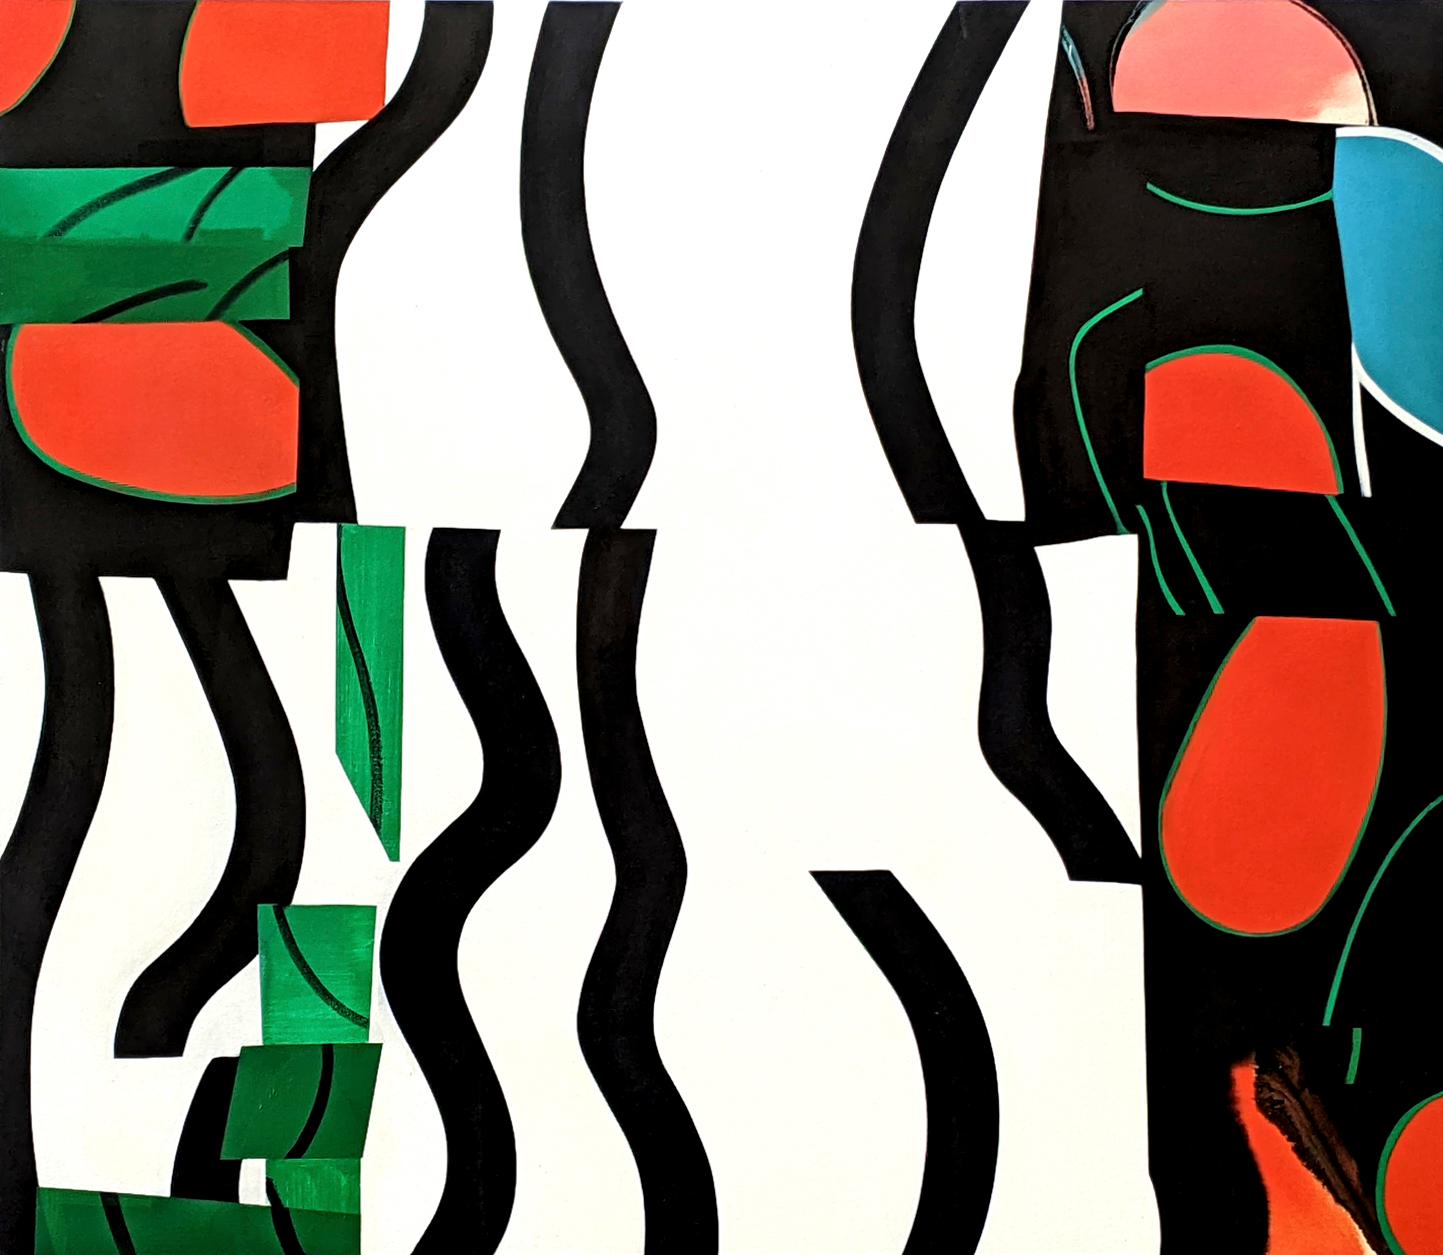 Mel Davis Abstract Painting – Rish and Foses 2 – ausdrucksstark, farbenfrohes, abstraktes, Öl auf Leinwand über Tafel